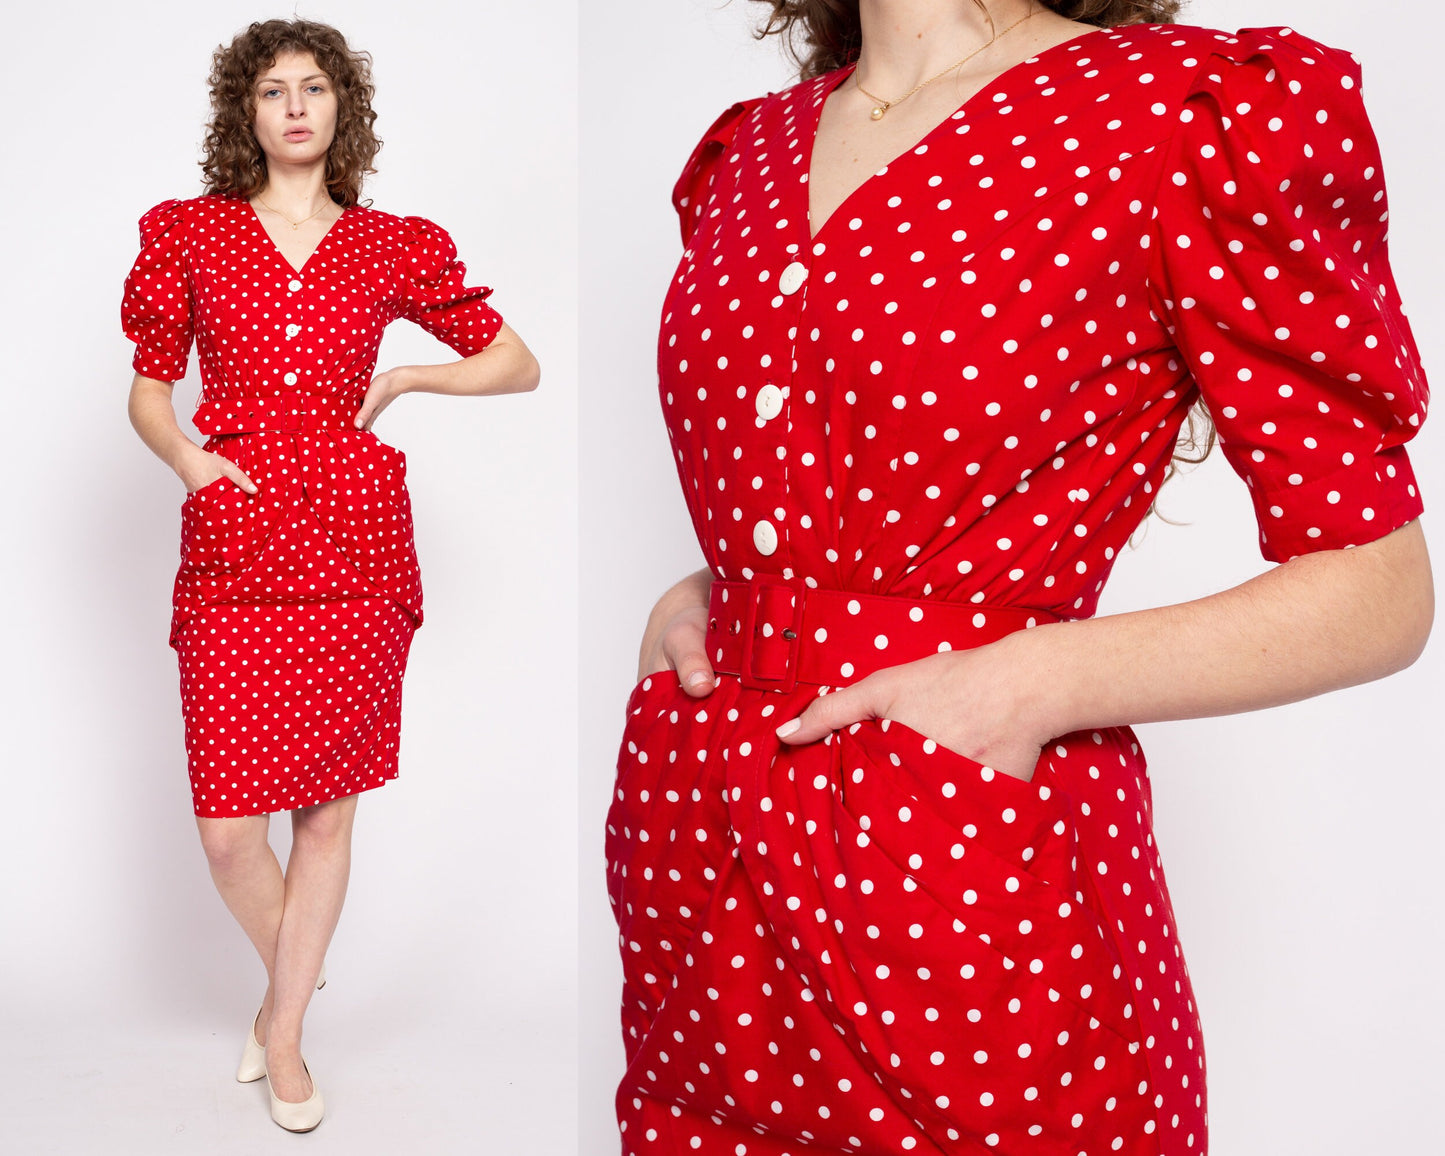 80s Choon Red Polka Dot Ladybug Pocket Dress - Small to Medium